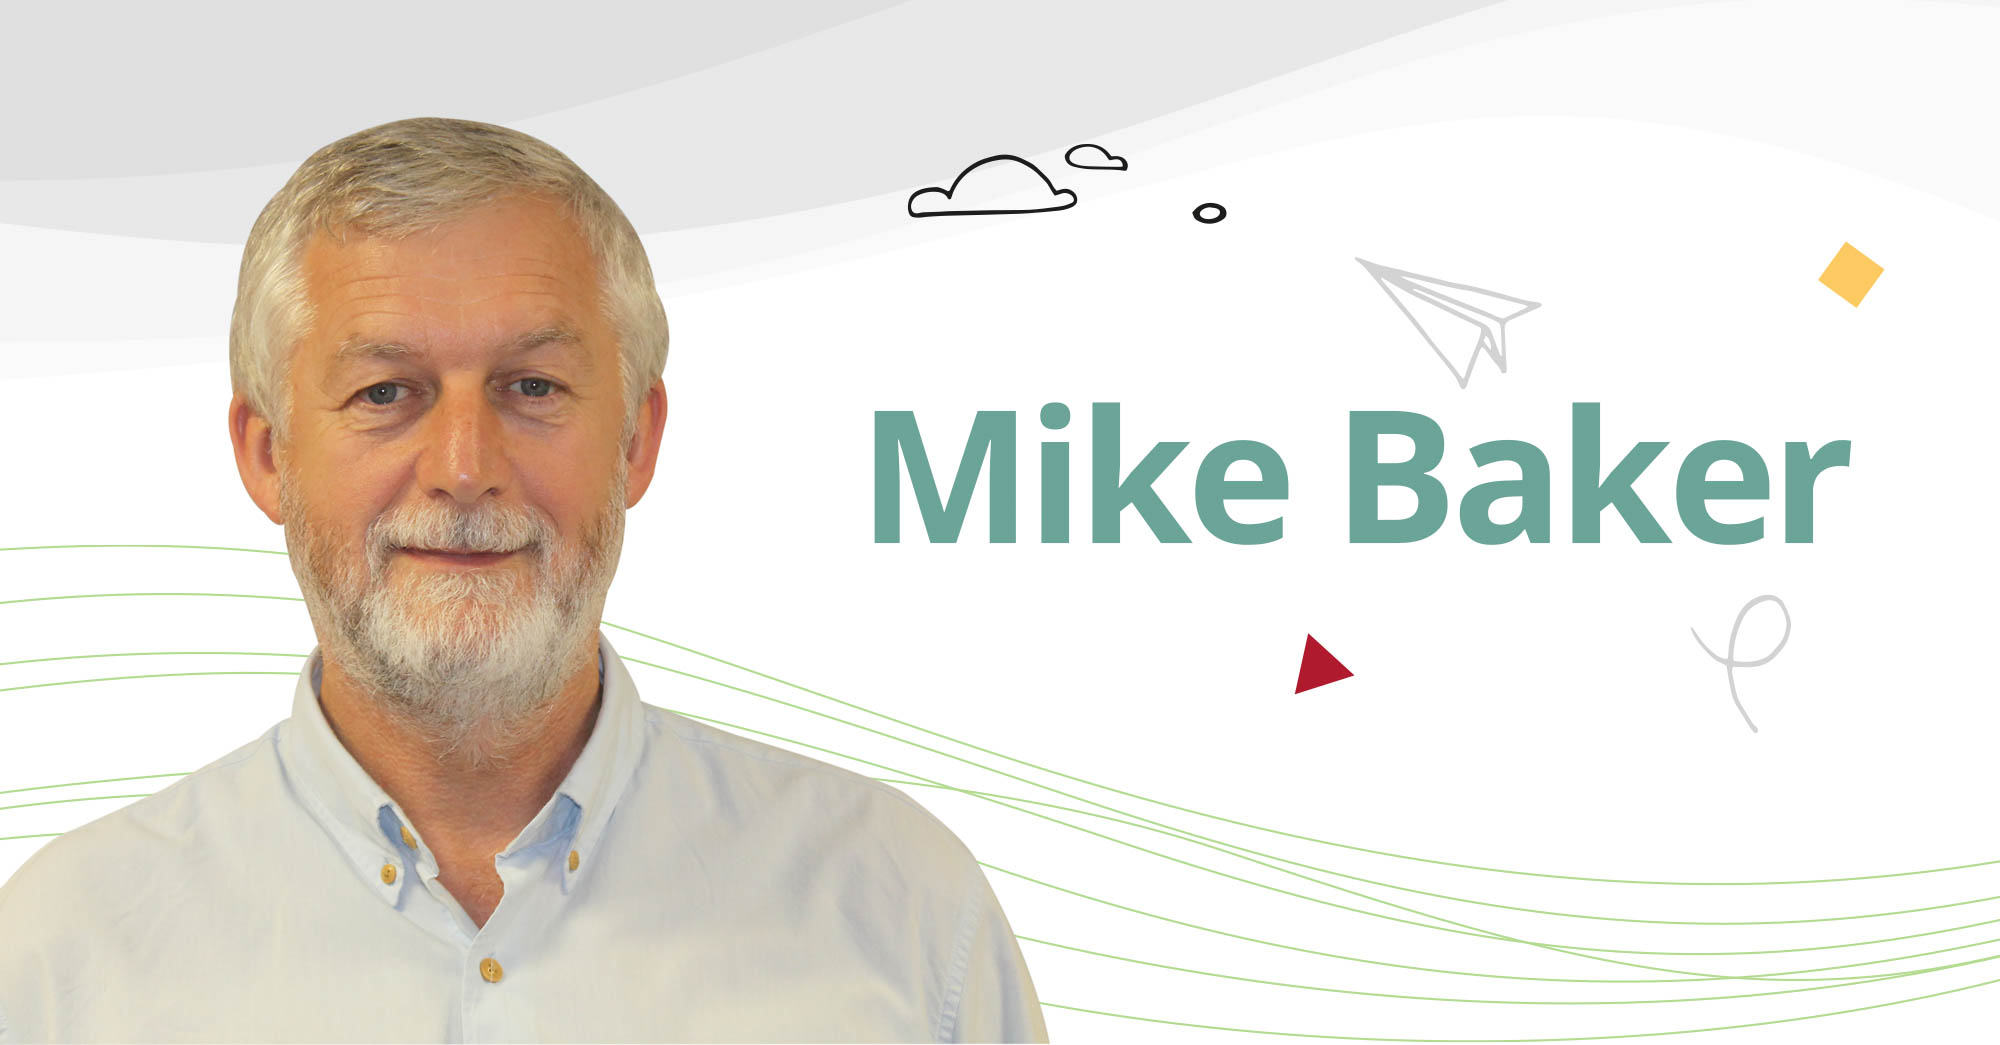 Global Shares Appoints Mike Baker Head of Business Development, EMEA